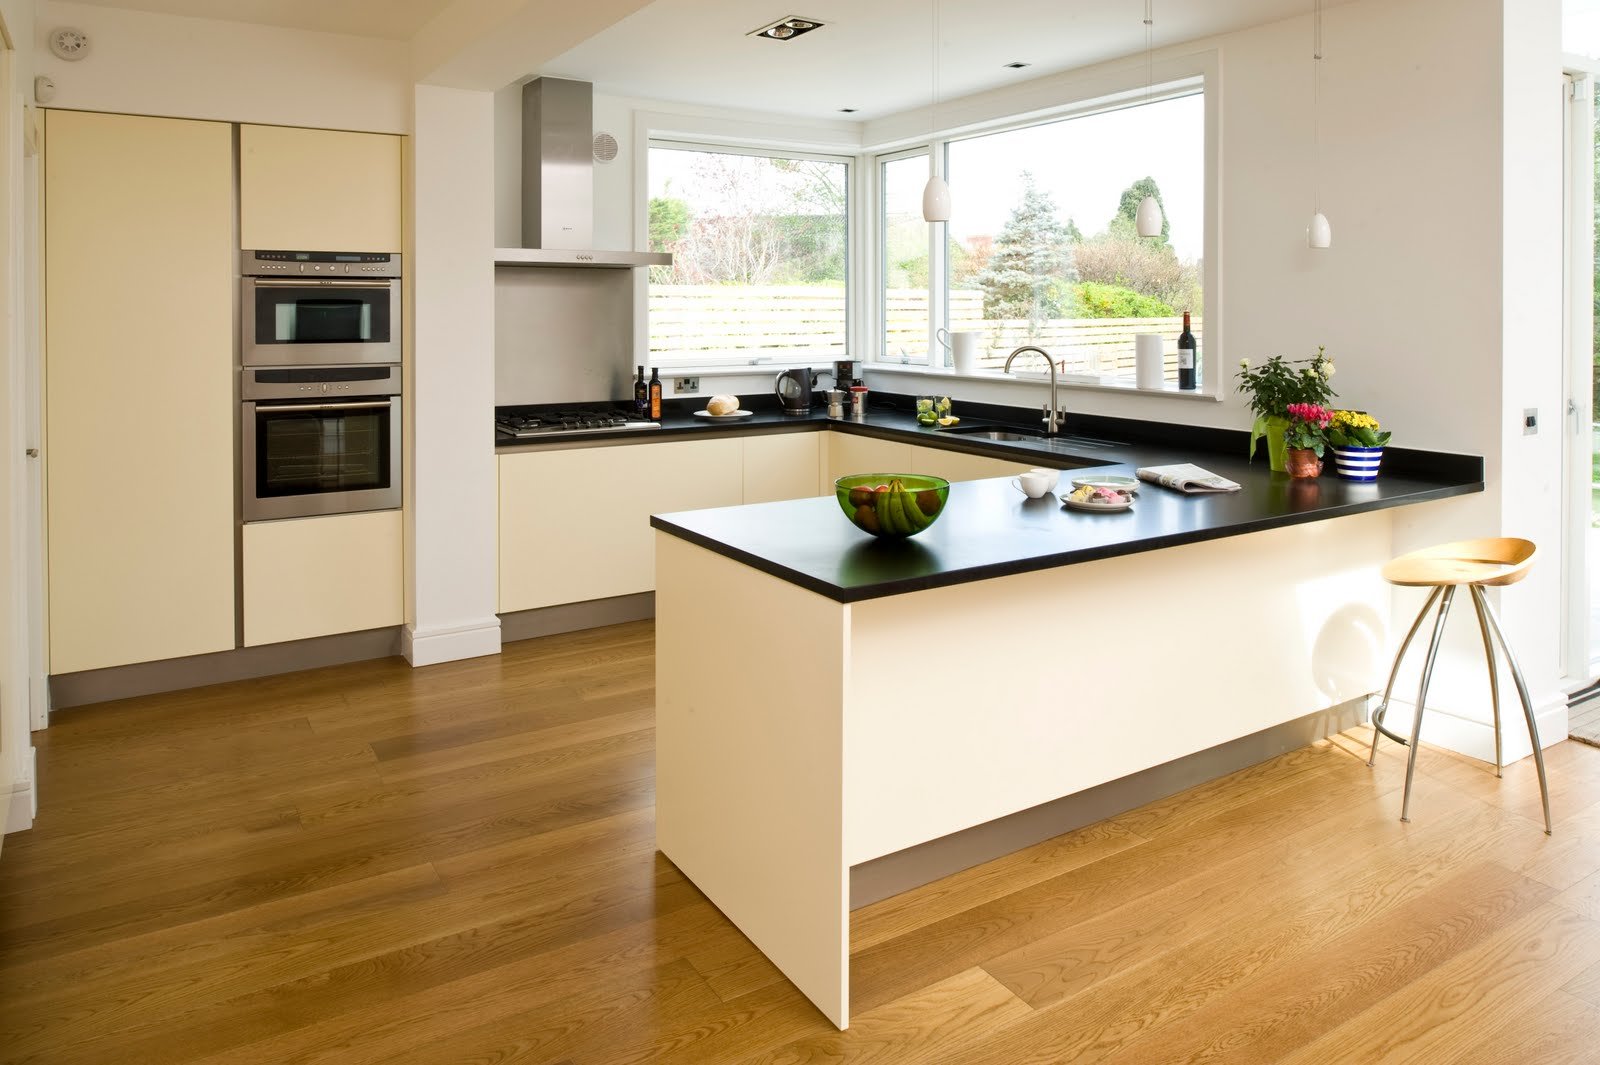 impressive-outstanding-our-quot-handlessquot-kitchen-style simple clean kitchen wooden floor